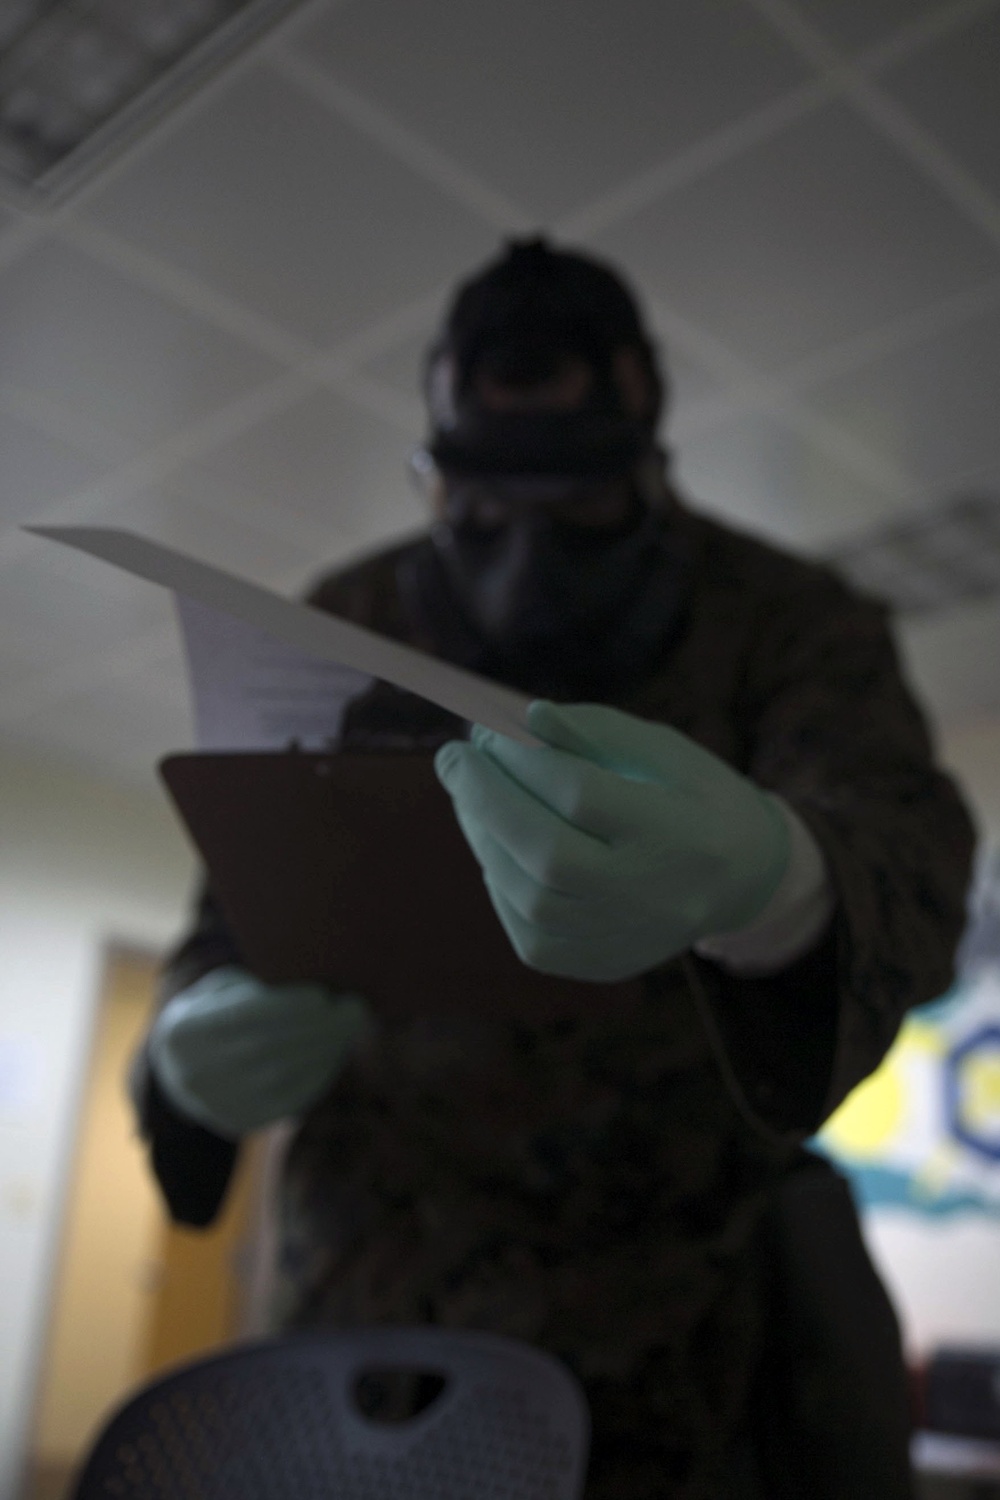 U.S. Marines, airmen and Republic of Korea troops train for contamination